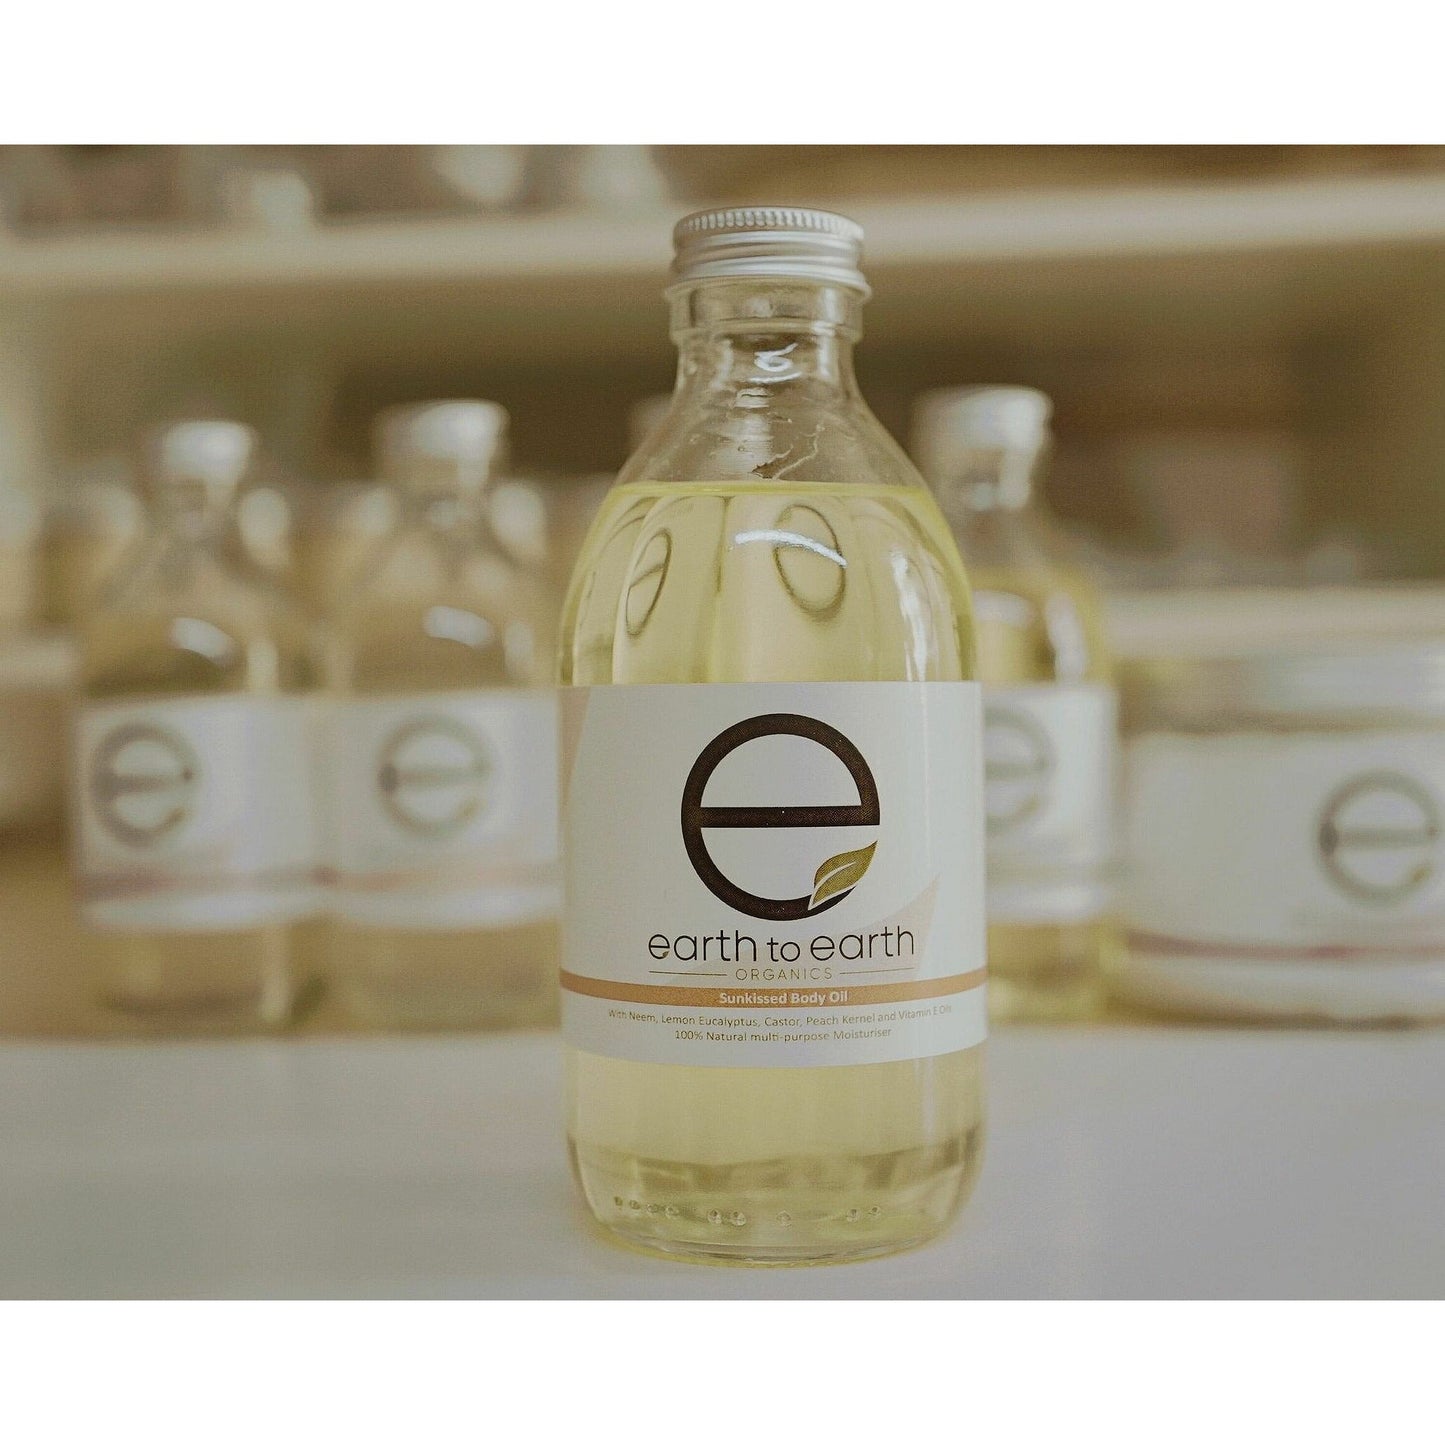 Eco-Friendly 3 in 1 Body Oil Set for Dry Skin